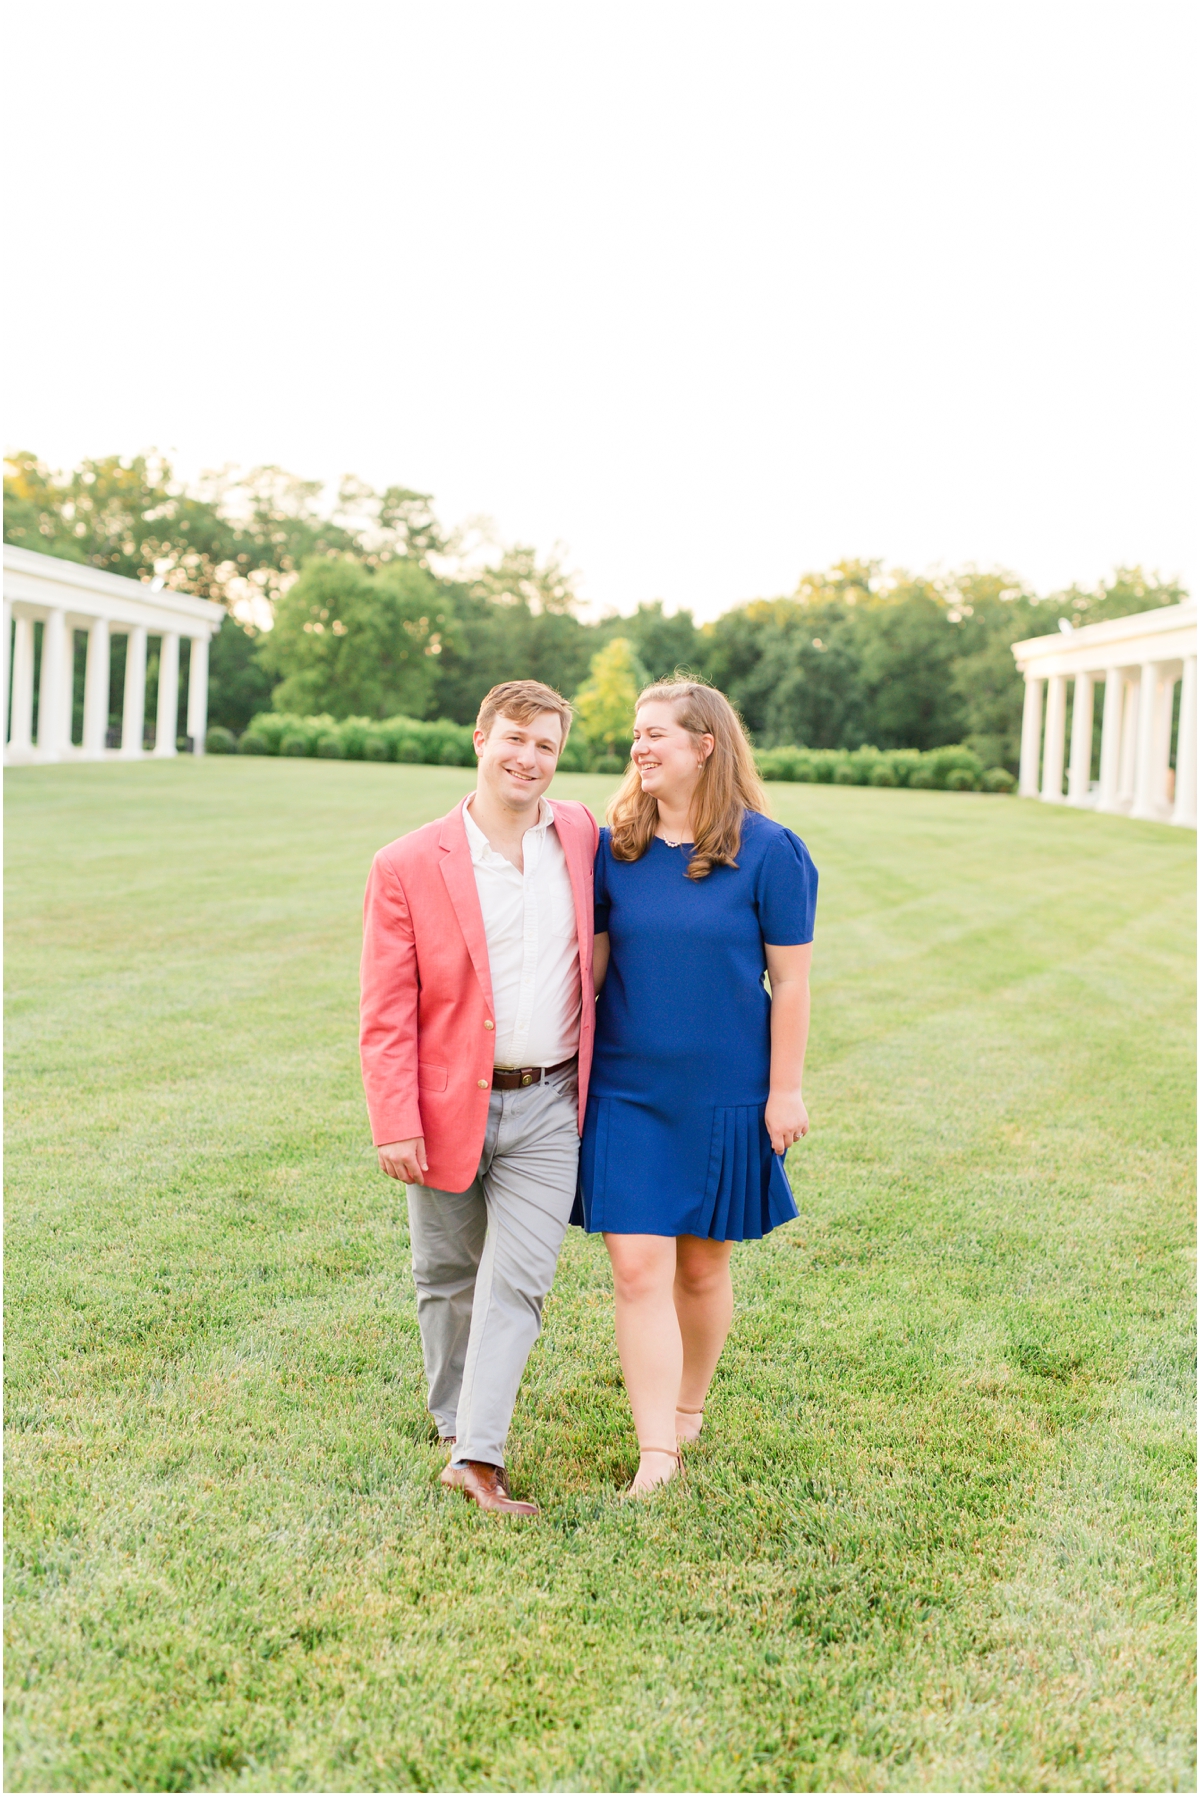 Summer engagement session at Glendale Shoals Preserve & Wofford college in Spartanburg, SC | Spartanburg Wedding Photographer